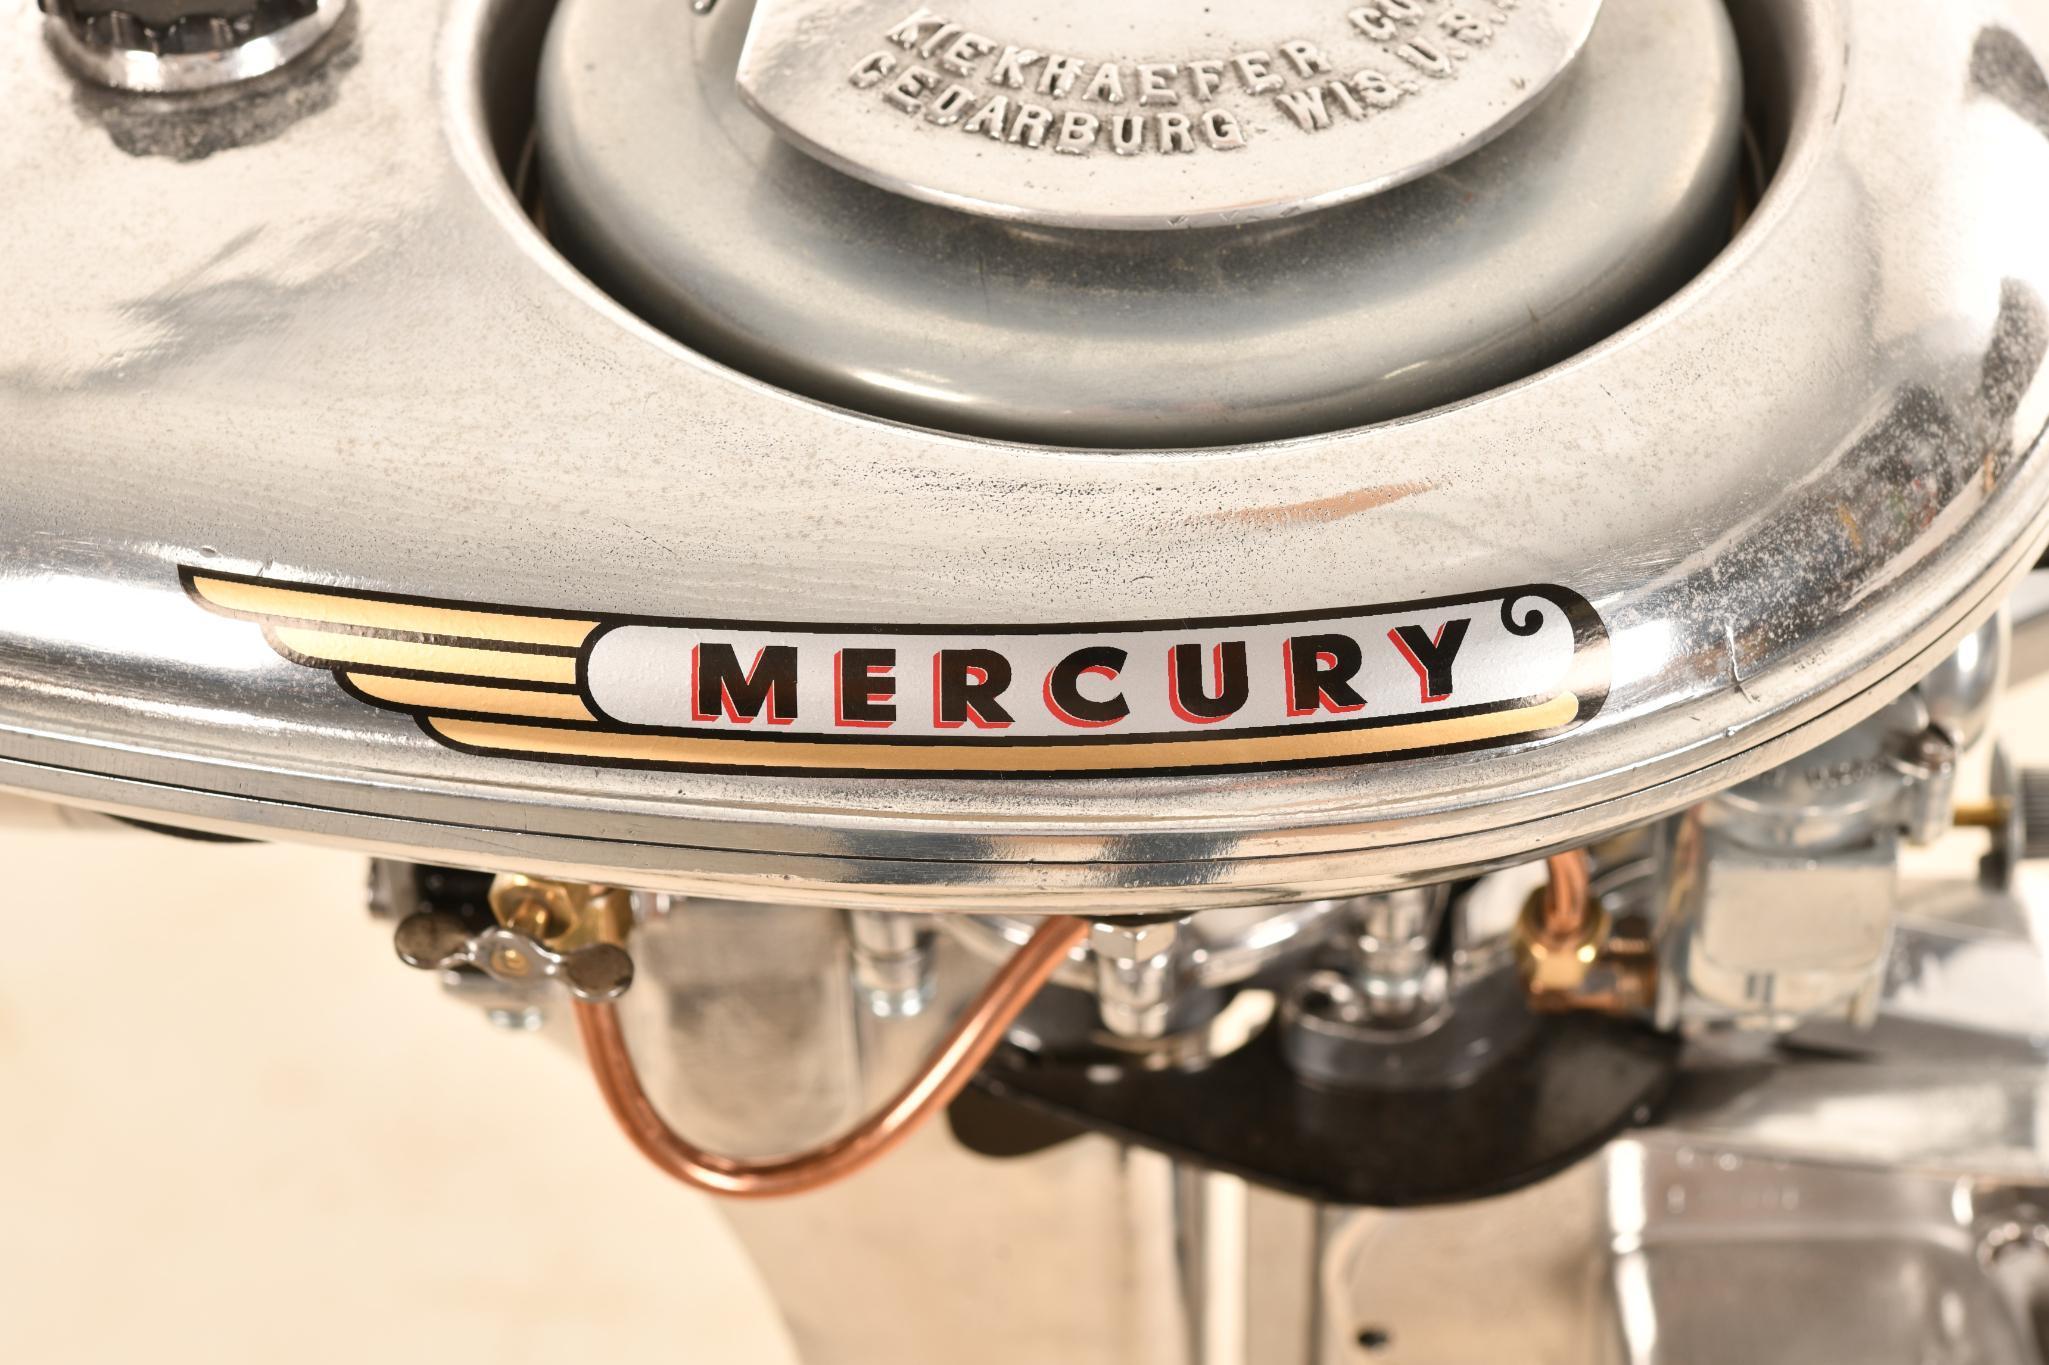 Mercury KB-1A Boat Motor